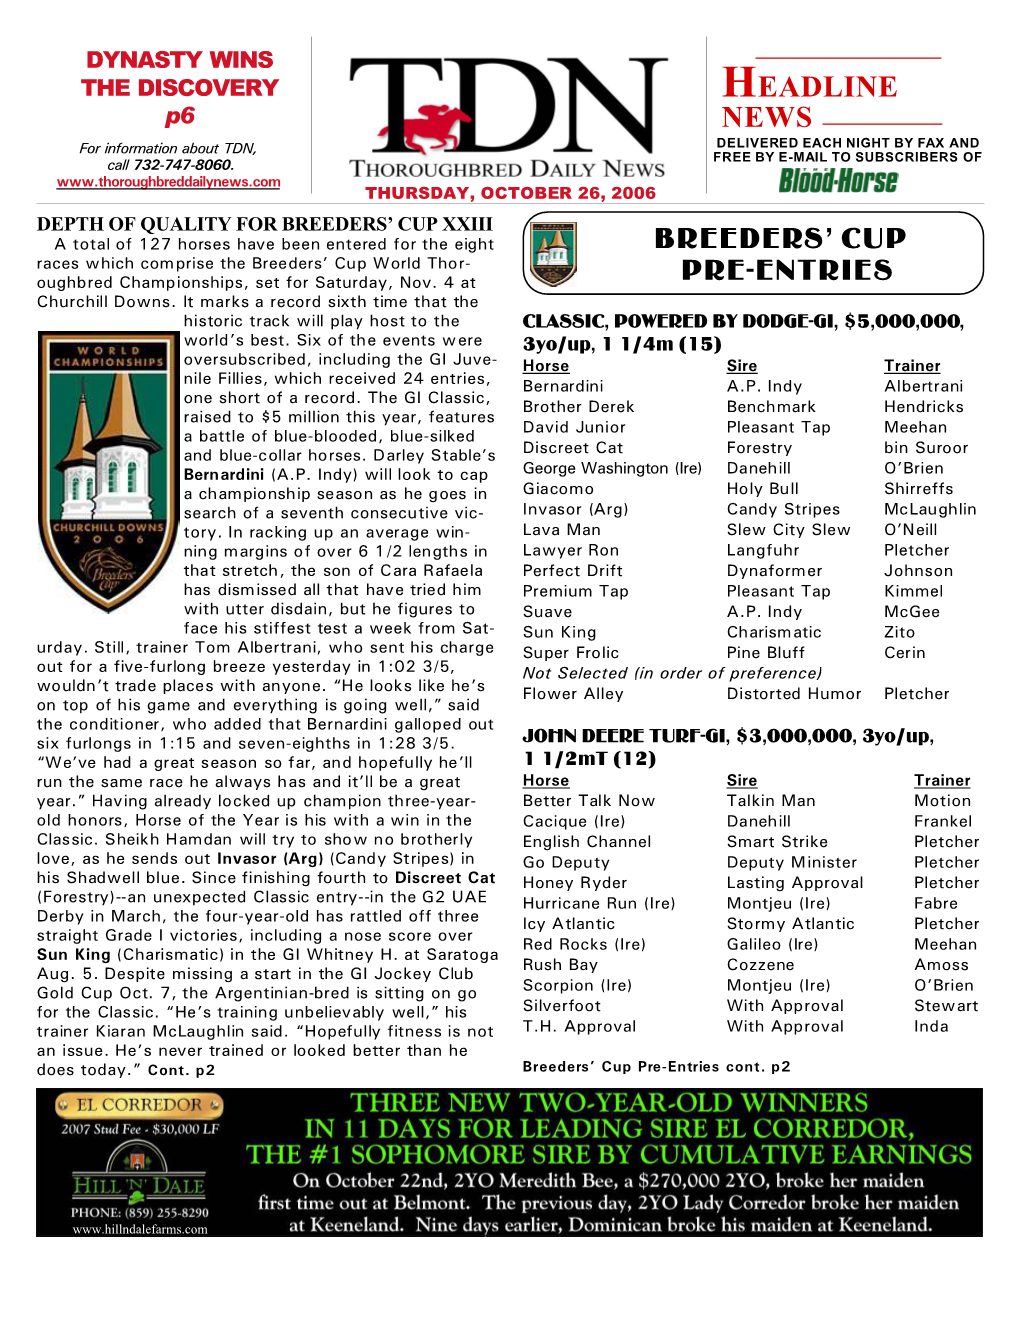 Breeders' Cup Pre-Entries Headline News